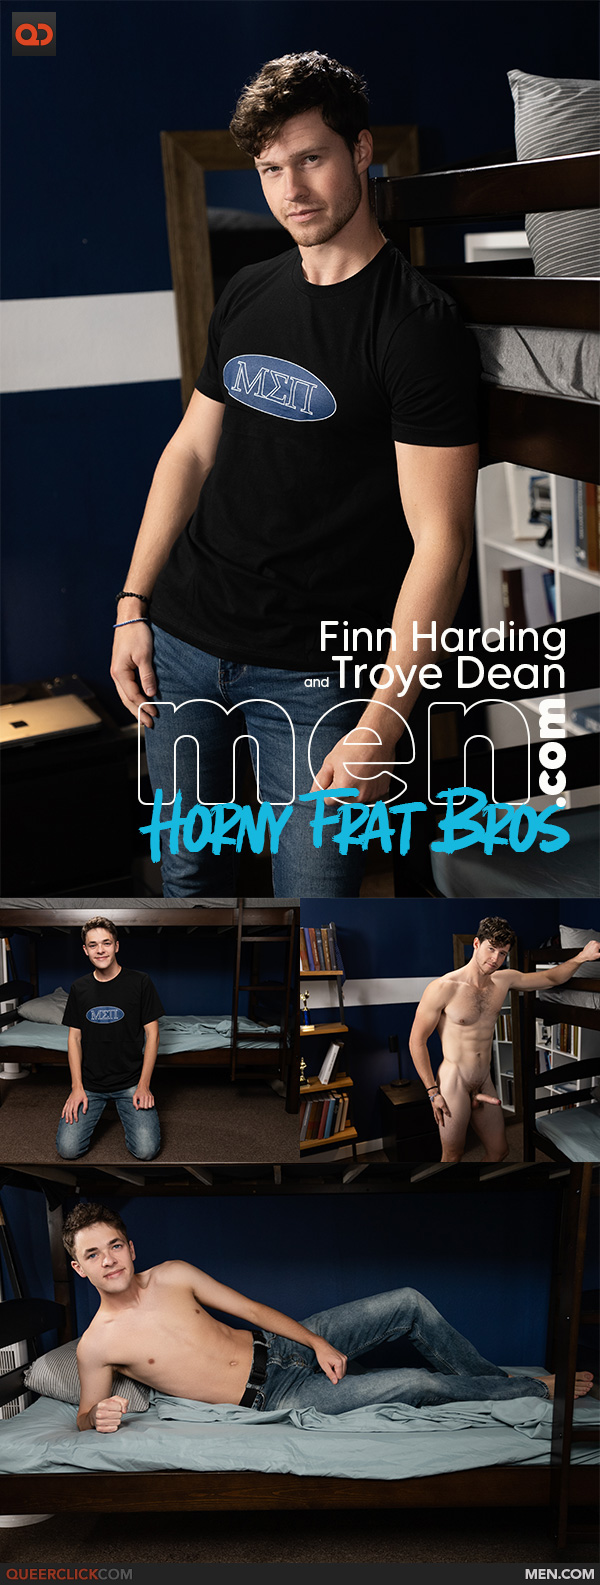 Men.com: Finn Harding and Troye Dean - Horny Frat Bros Part 2